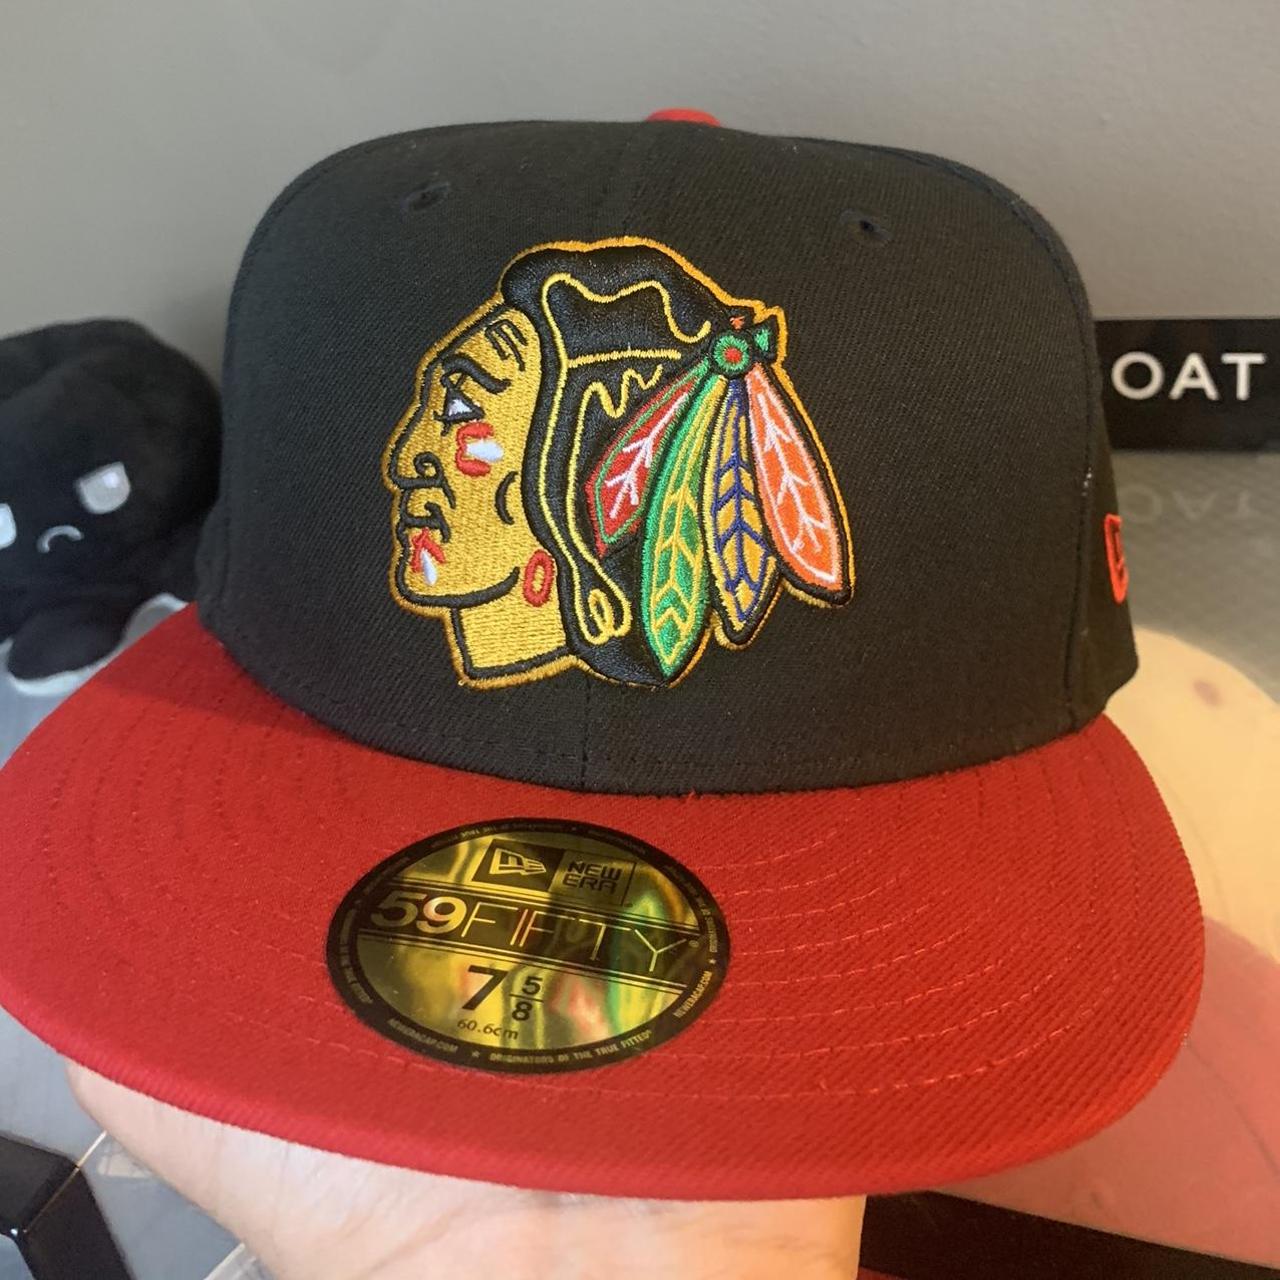 Verlammen geloof ophouden NHL Chicago Blackhawks 7 5/8 Fitted Hat with Chicago... - Depop